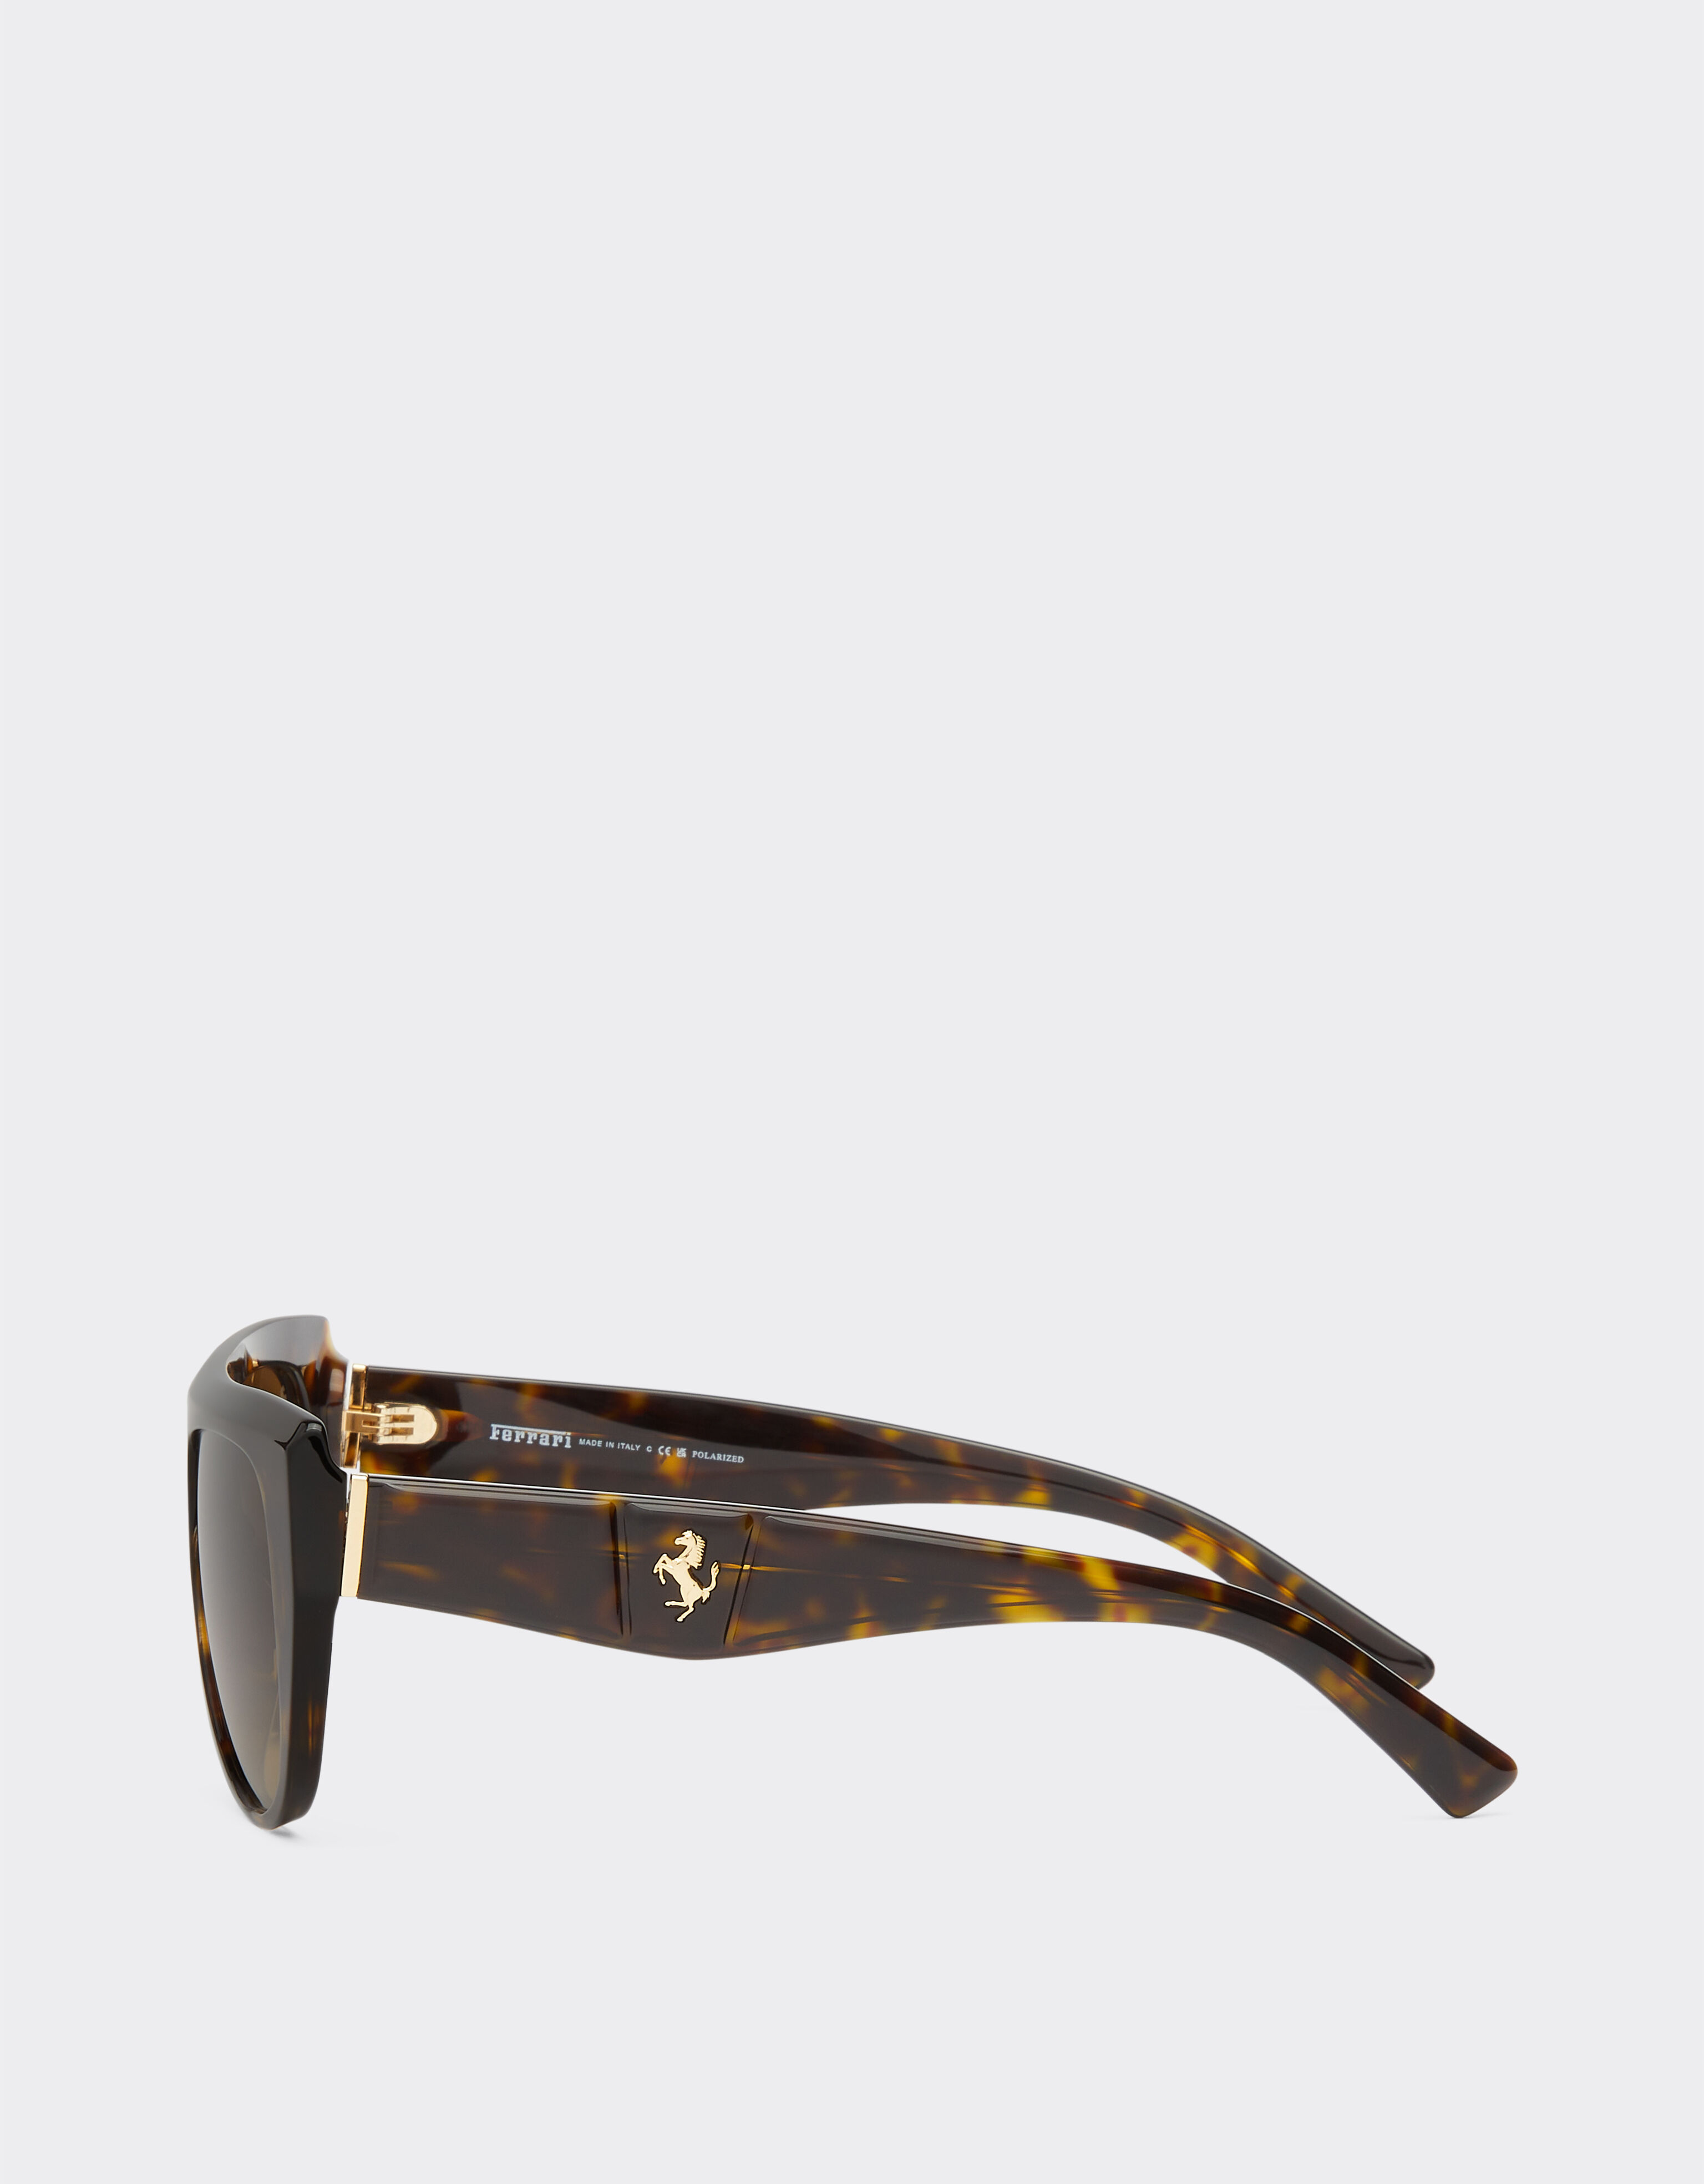 Ferrari Ferrari sunglasses in havana acetate with polarised lenses Tortoiseshell F1202f